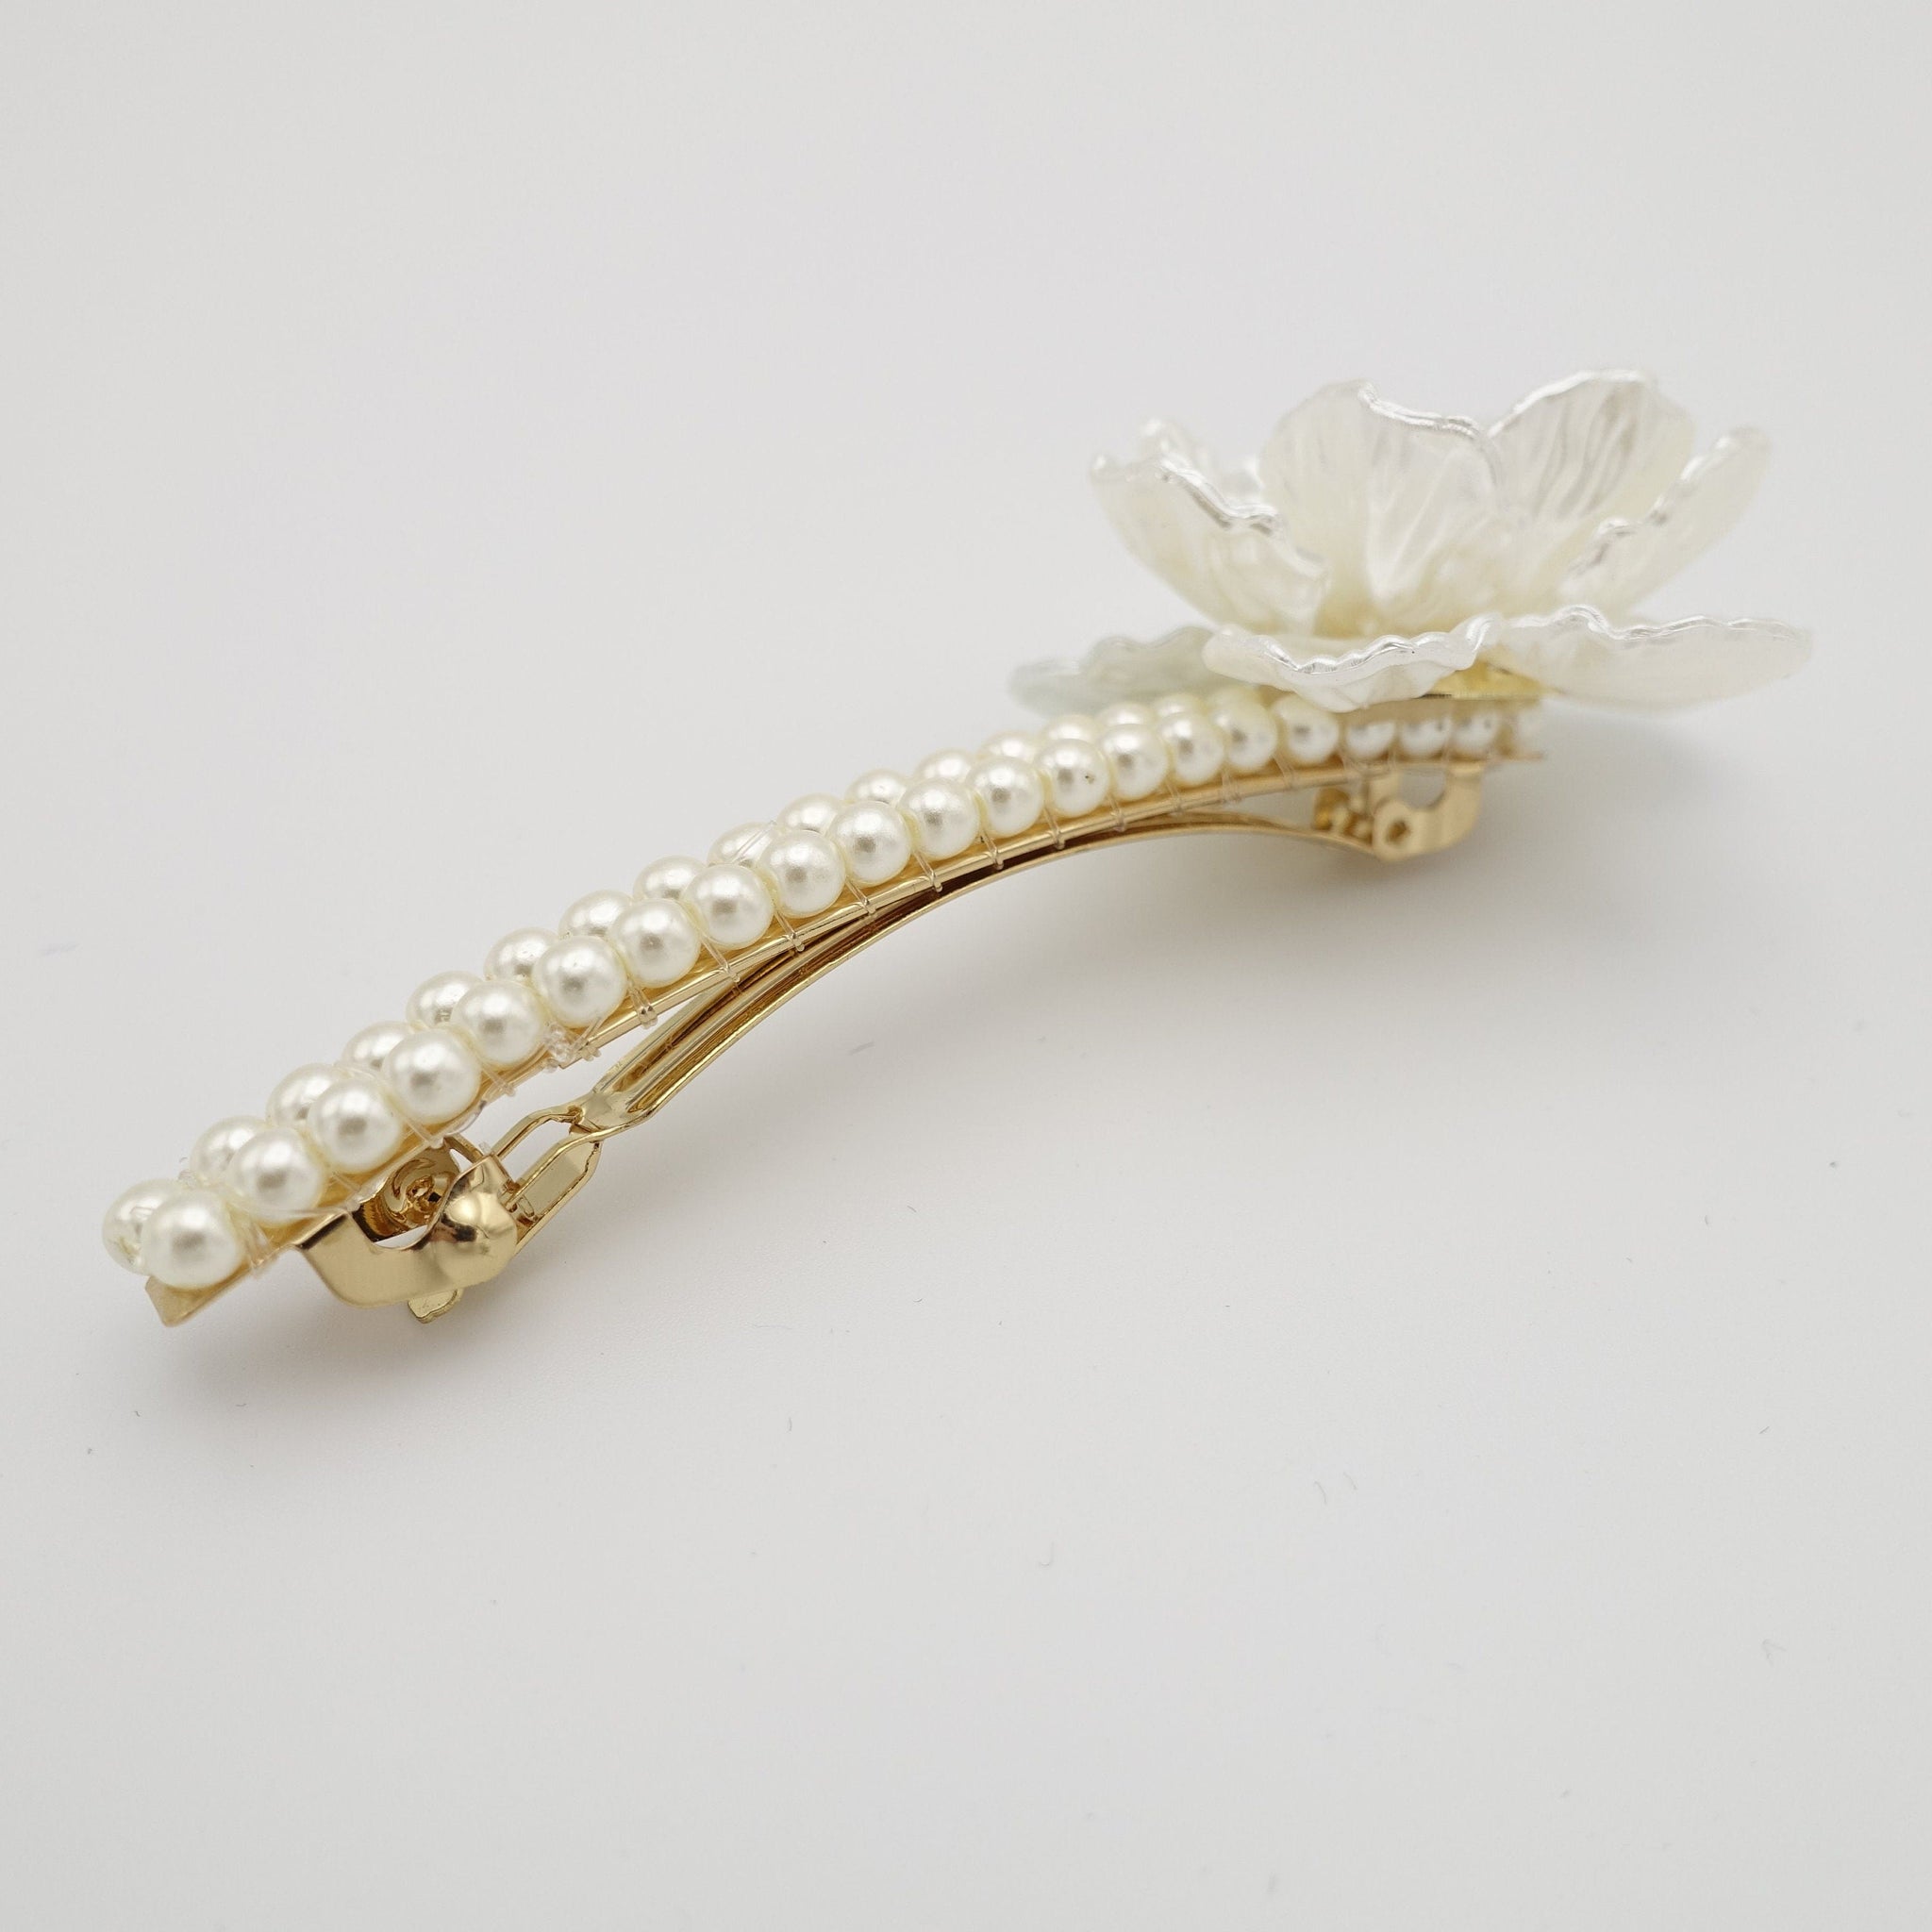 veryshine.com Barrette (Bow) pearl decorated flower hair barrette snap clip woman hair accessory